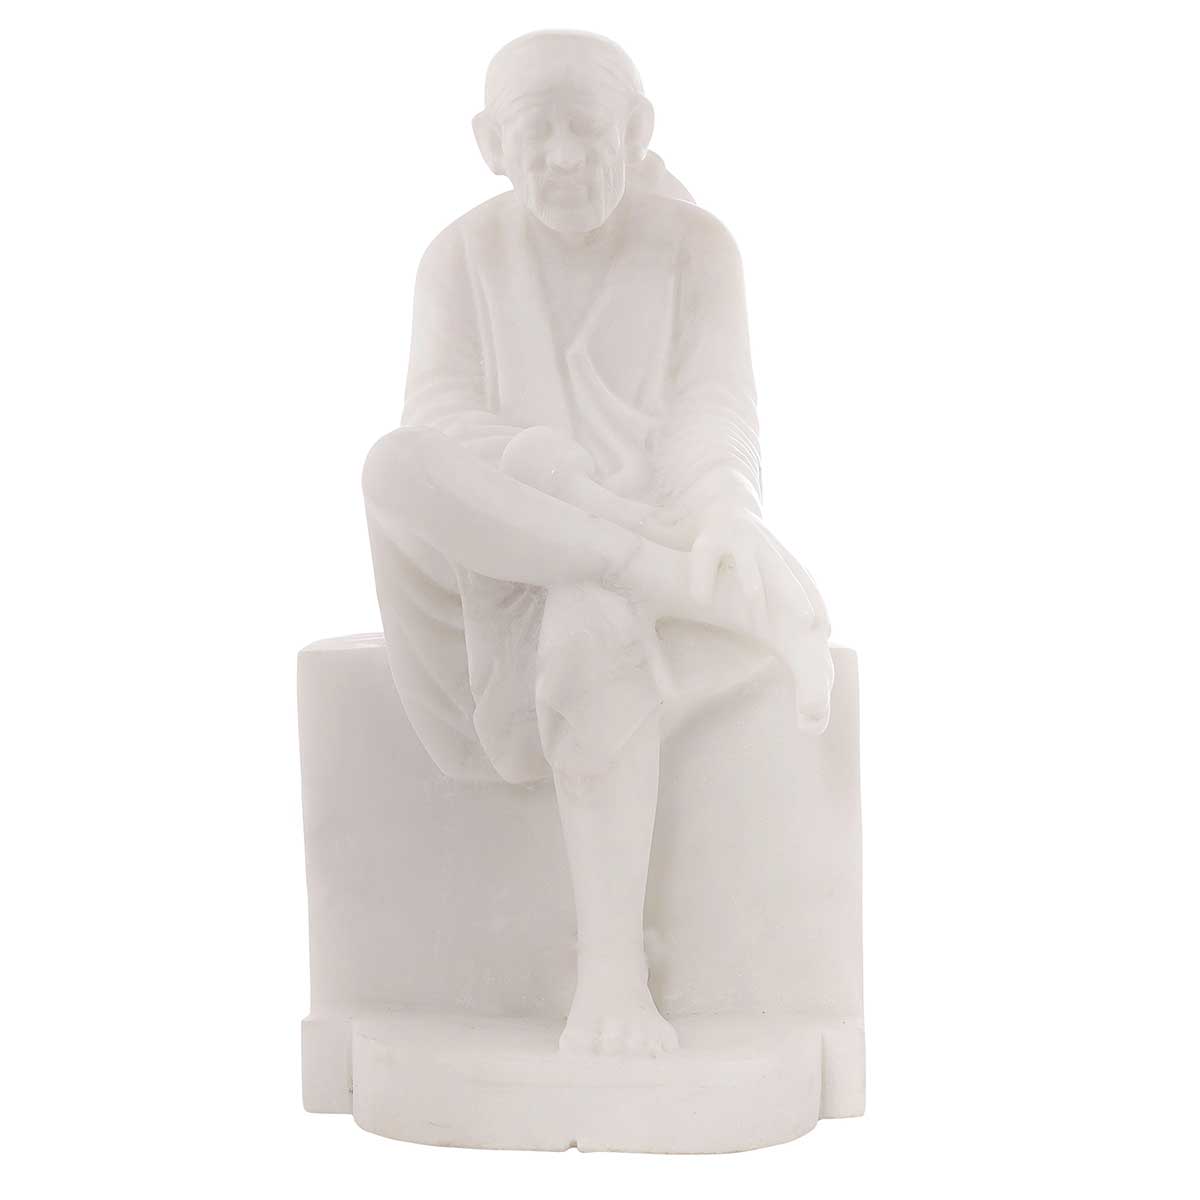 Lord Sai Baba Sitting Idol Made of Marble - 8 x 7 x 16 inch, 27 kg